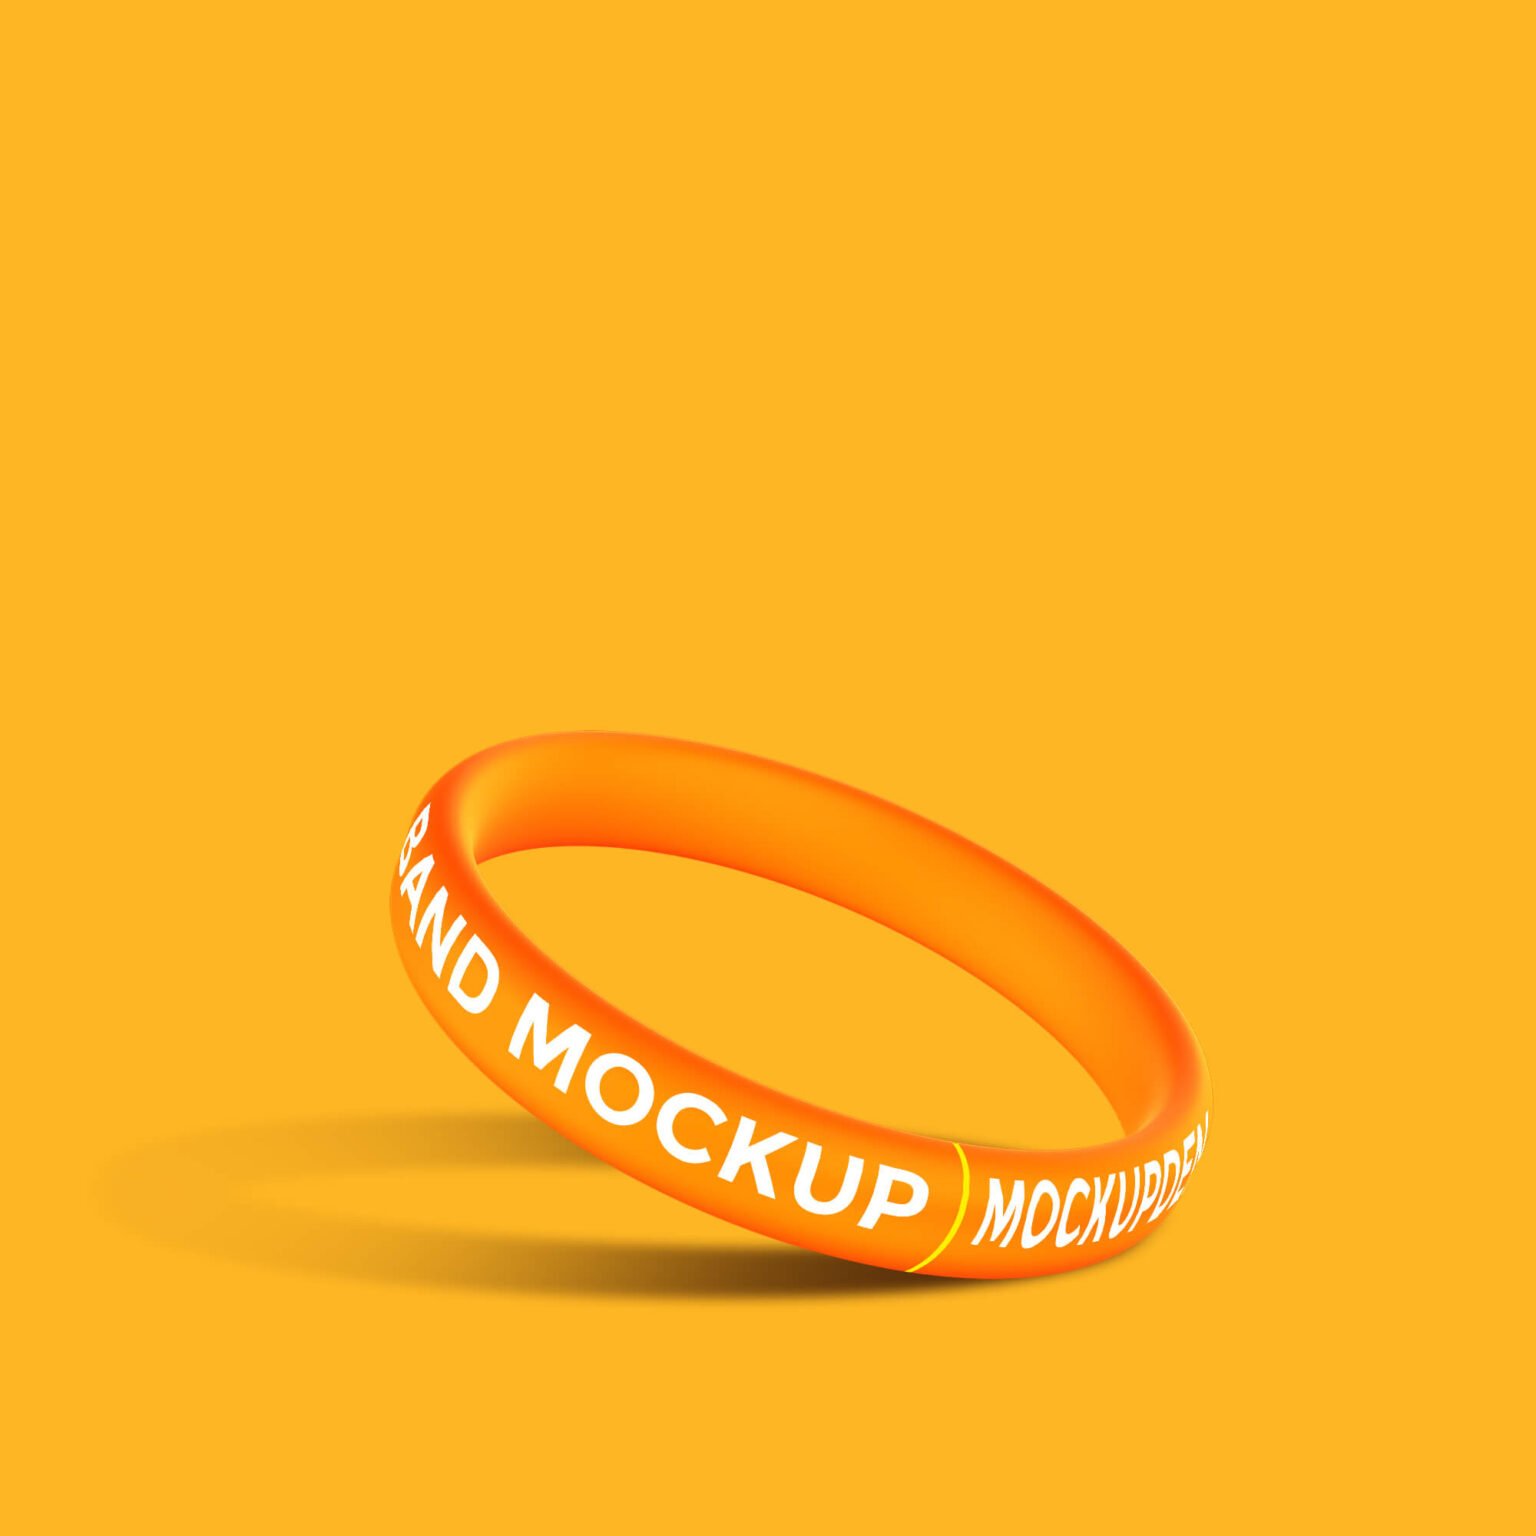 Download Free Band Mockup PSD Template - Mockup Den